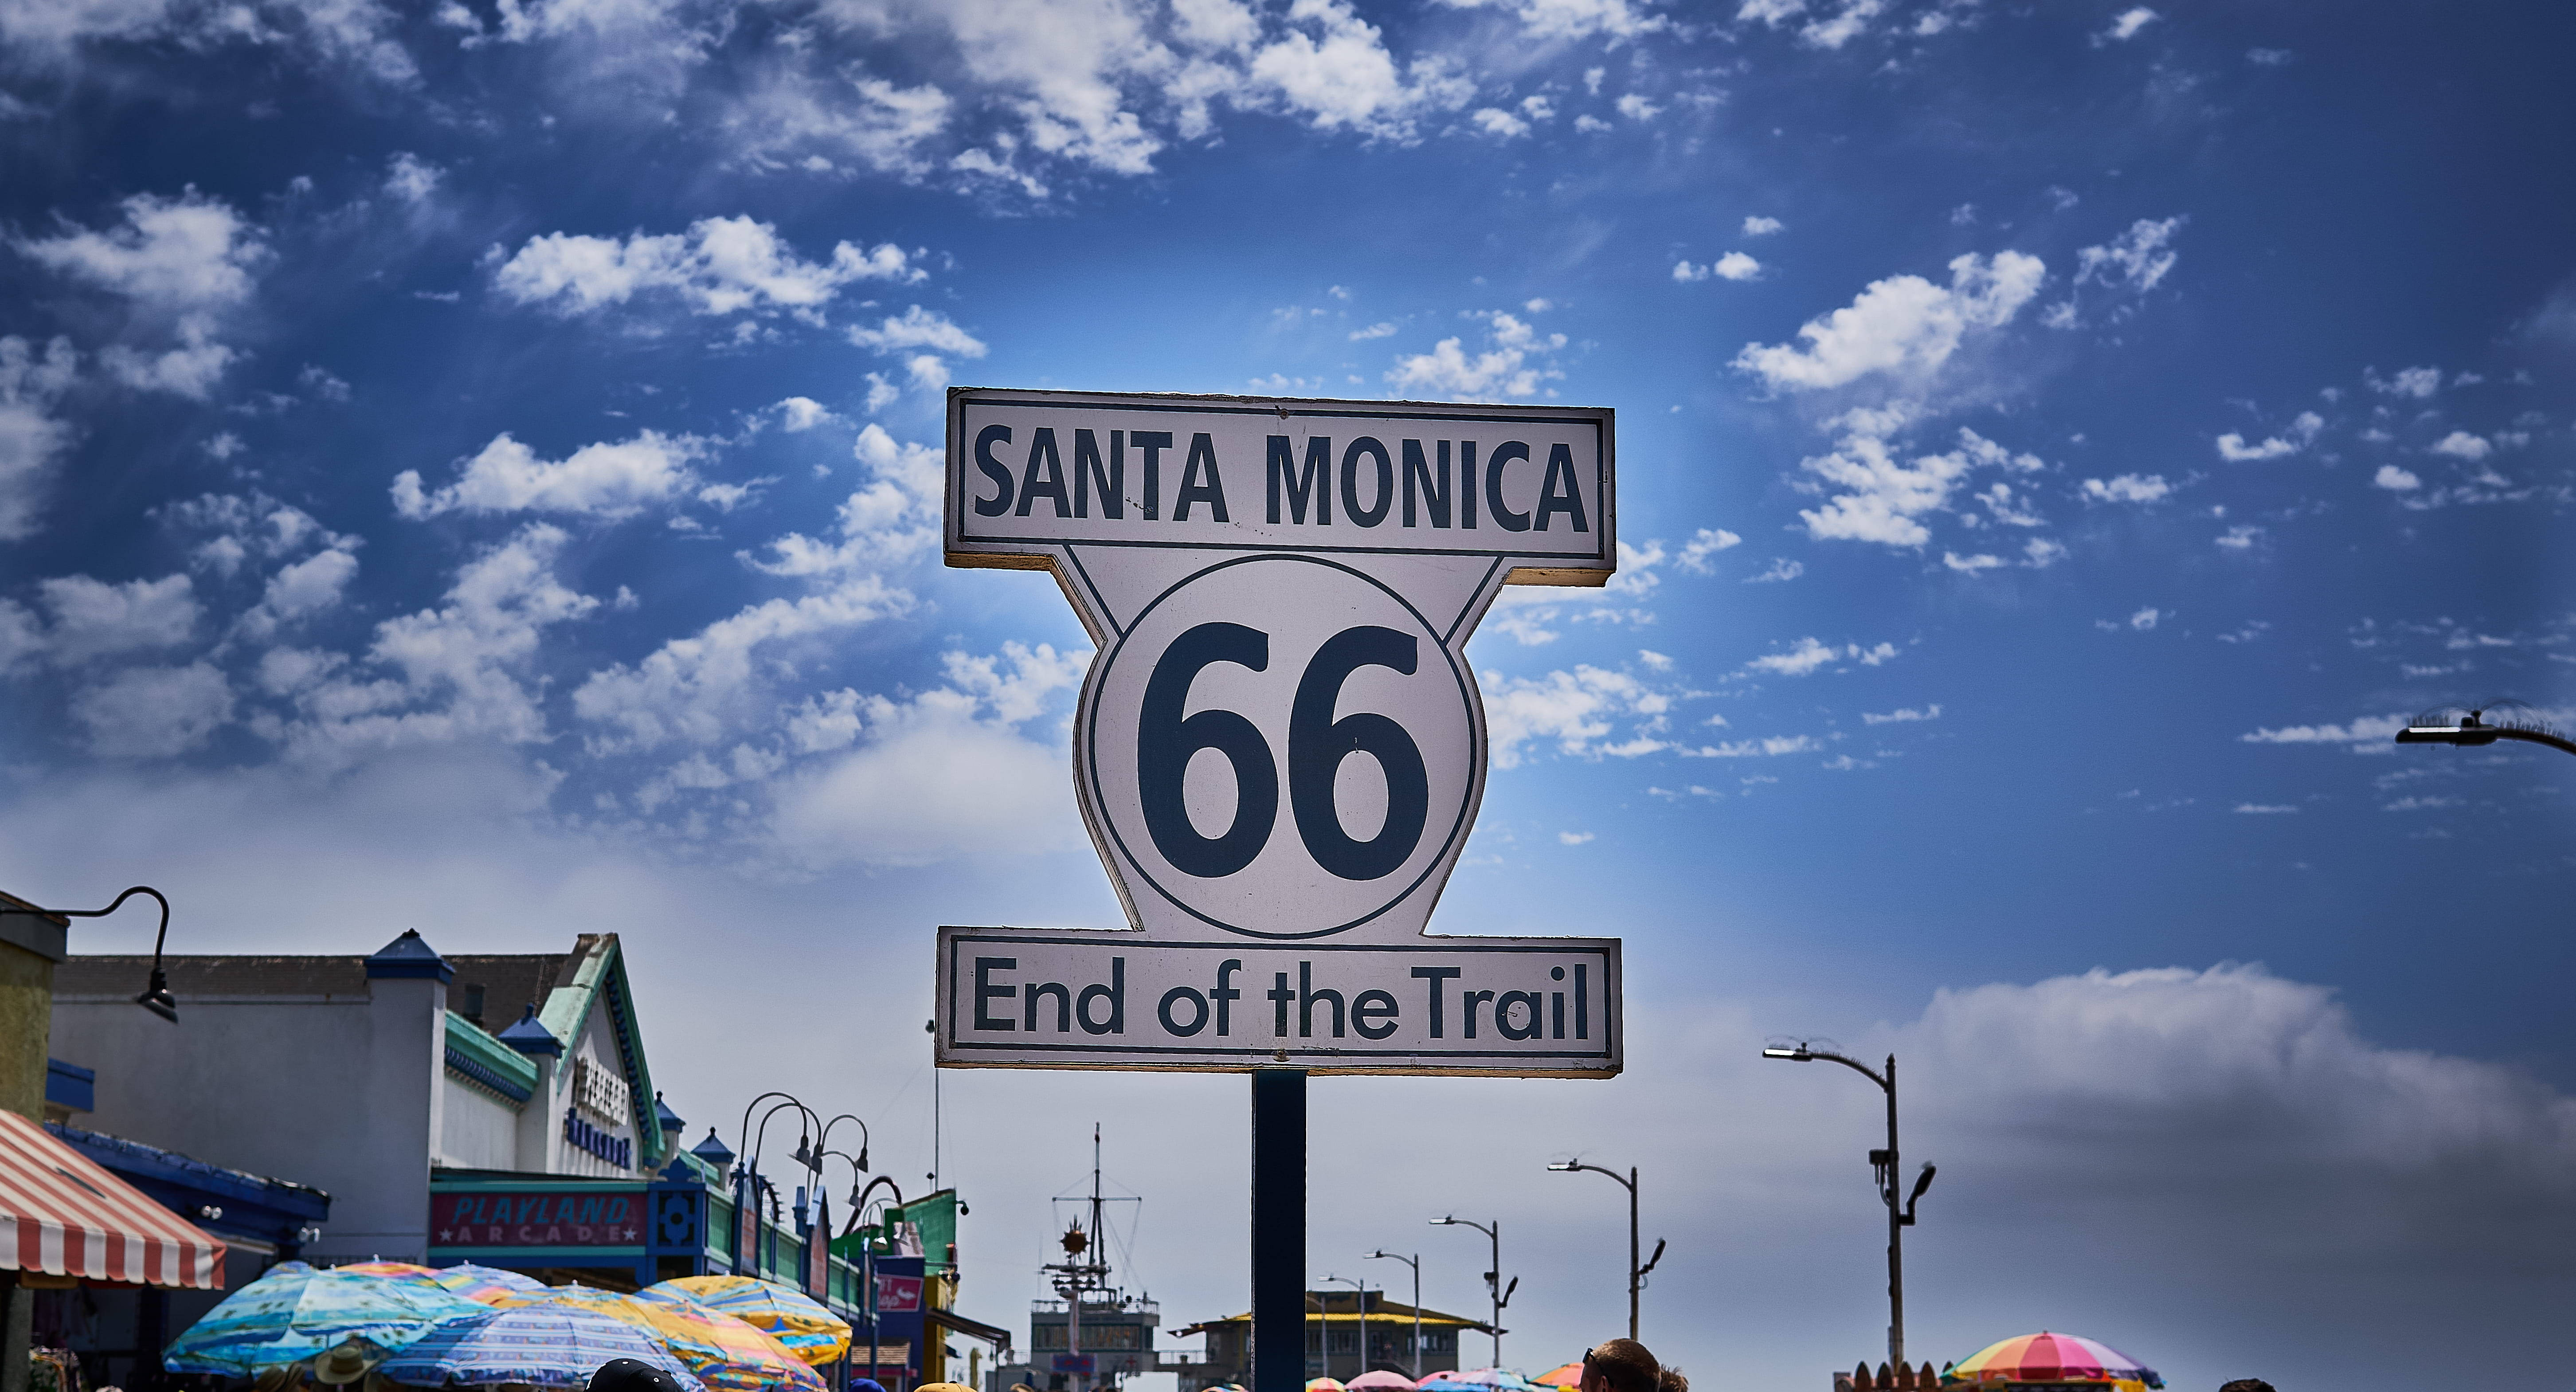 Download Santa Monica Route 66 Marker Wallpaper Wallpapers Com